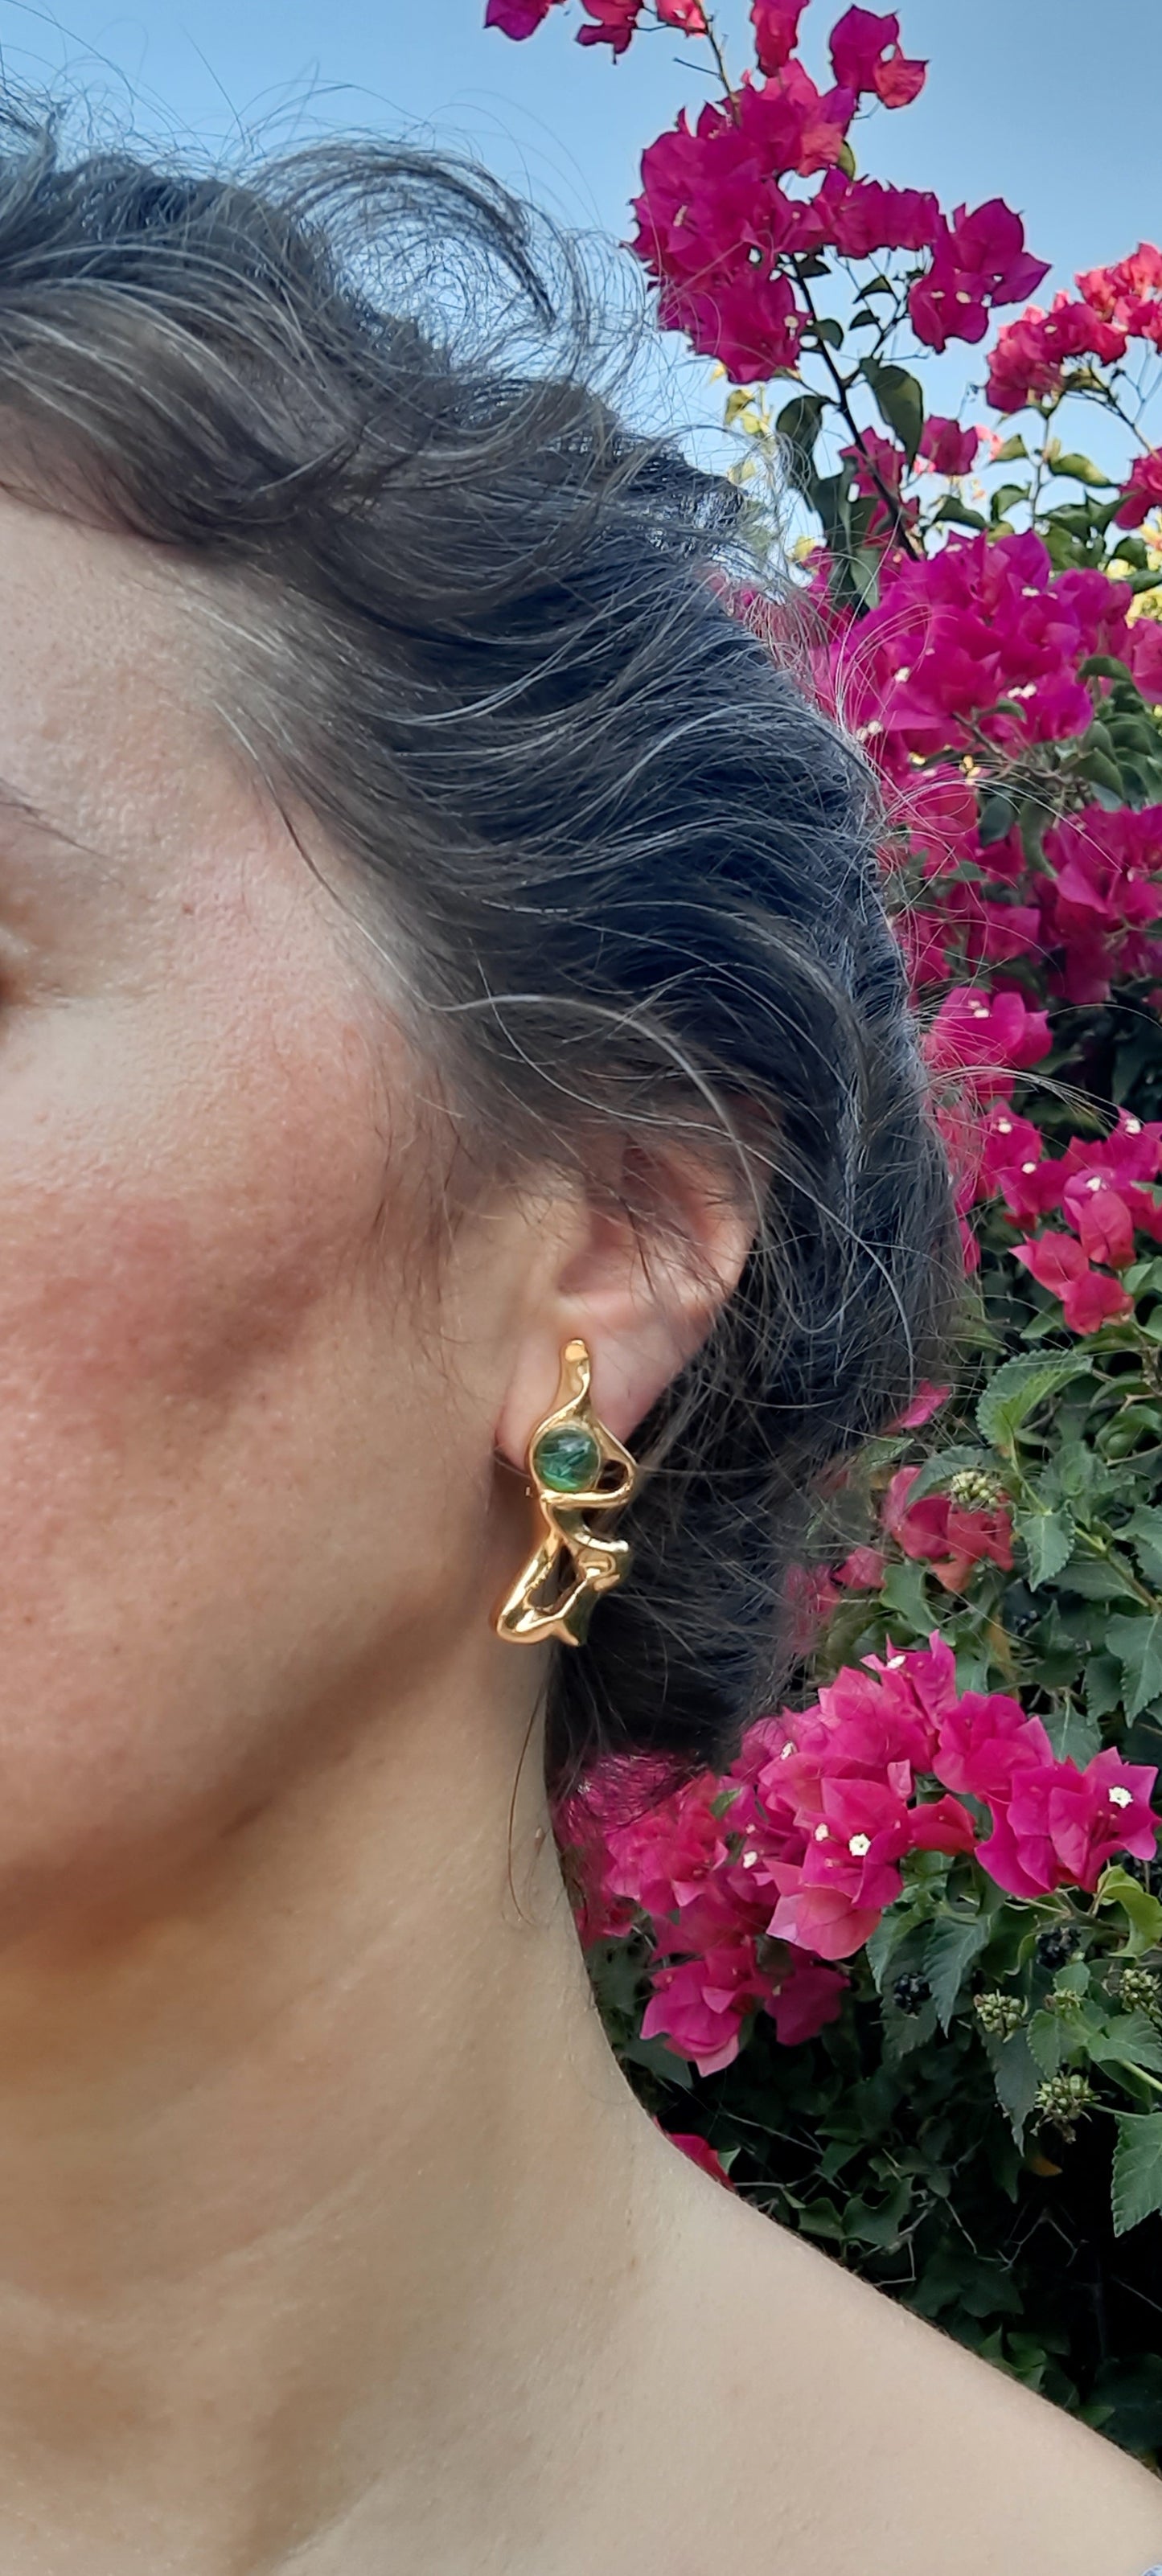 Vintage Gold & Green Art Earrings